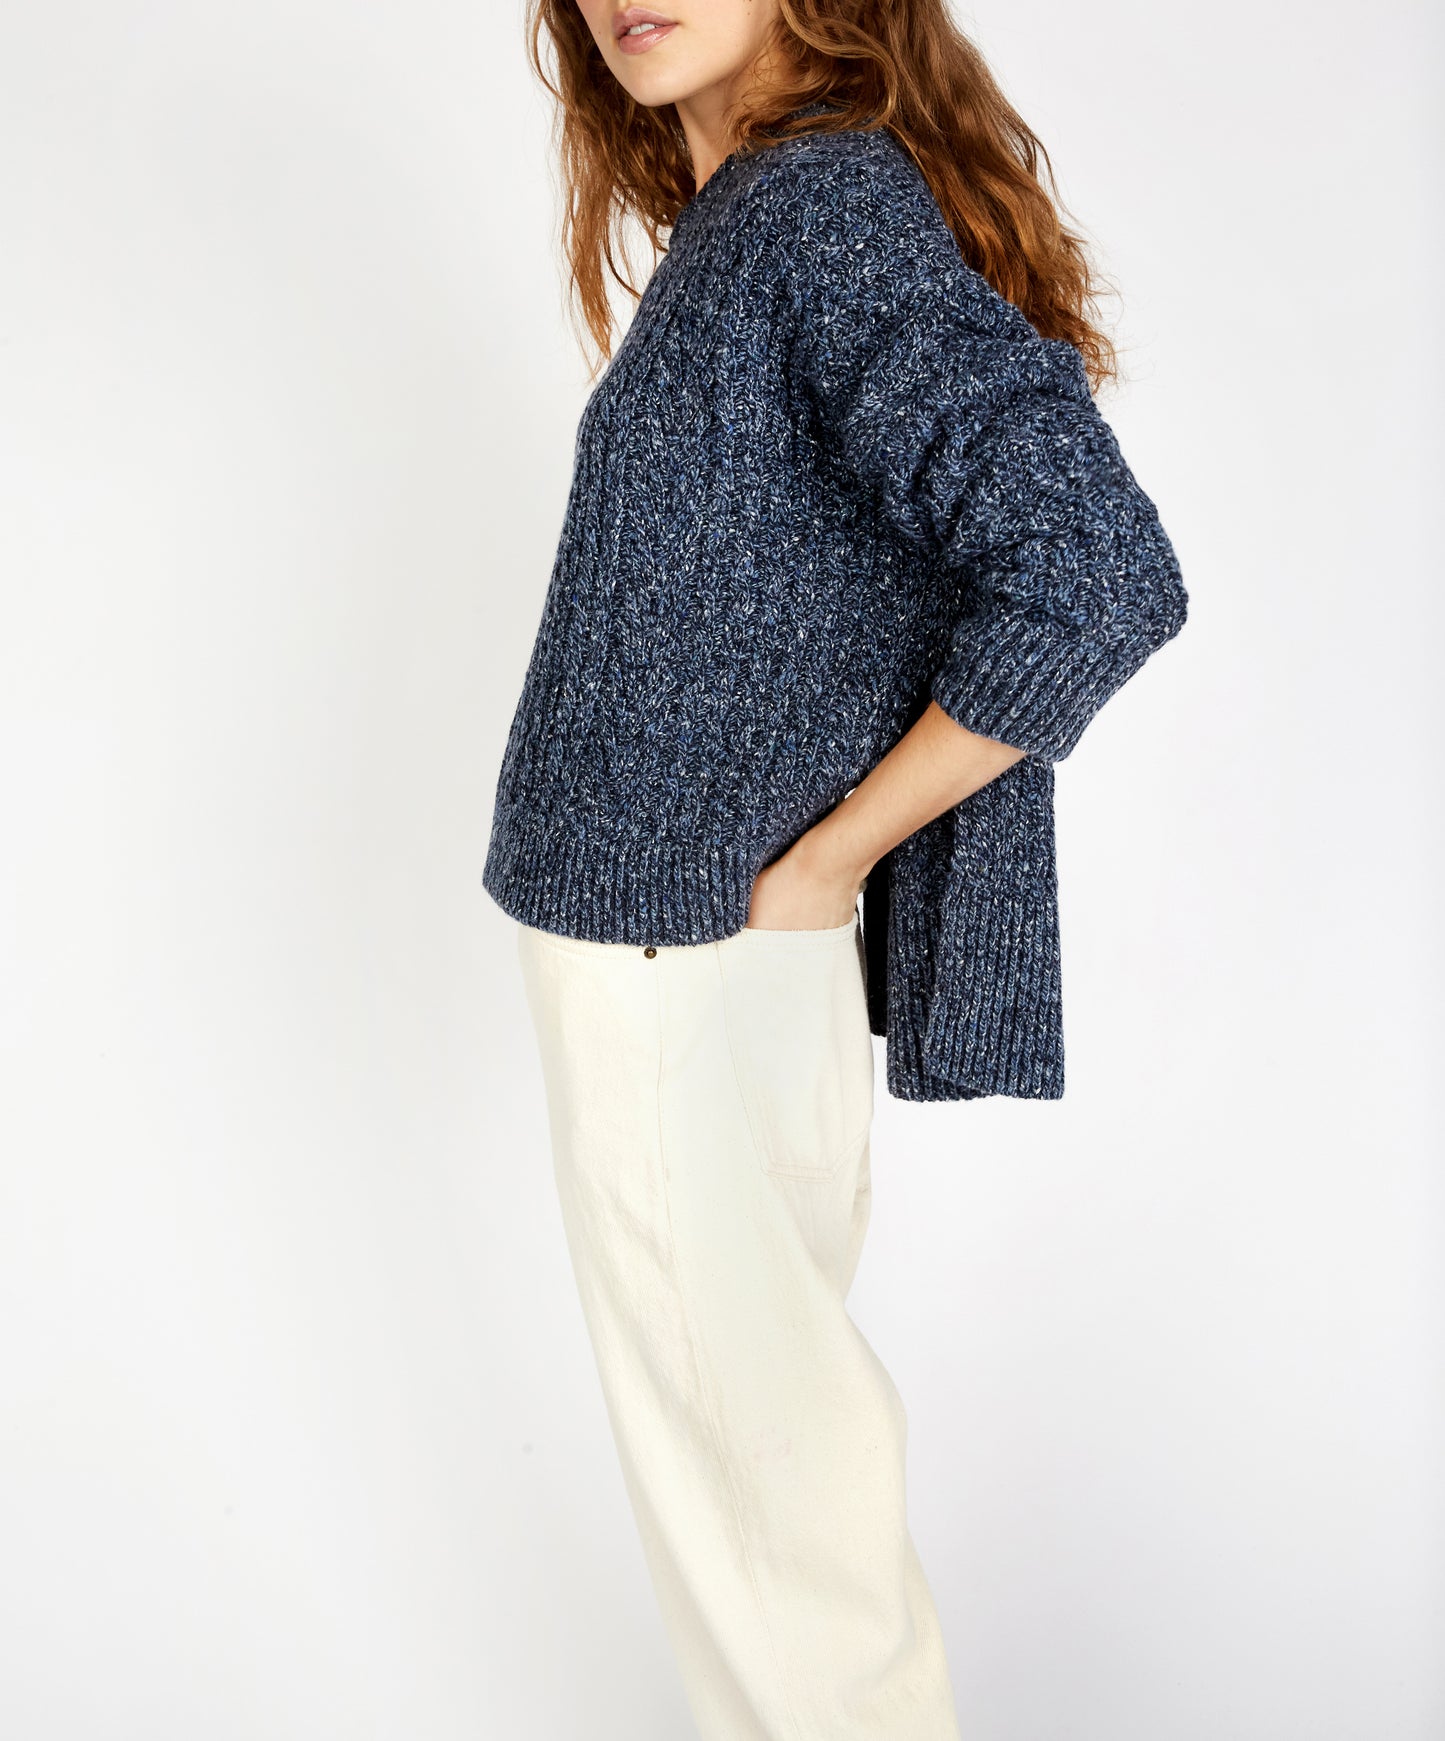 IrelandsEye Knitwear Sorrell Cropped Aran Sweater Dark Denim